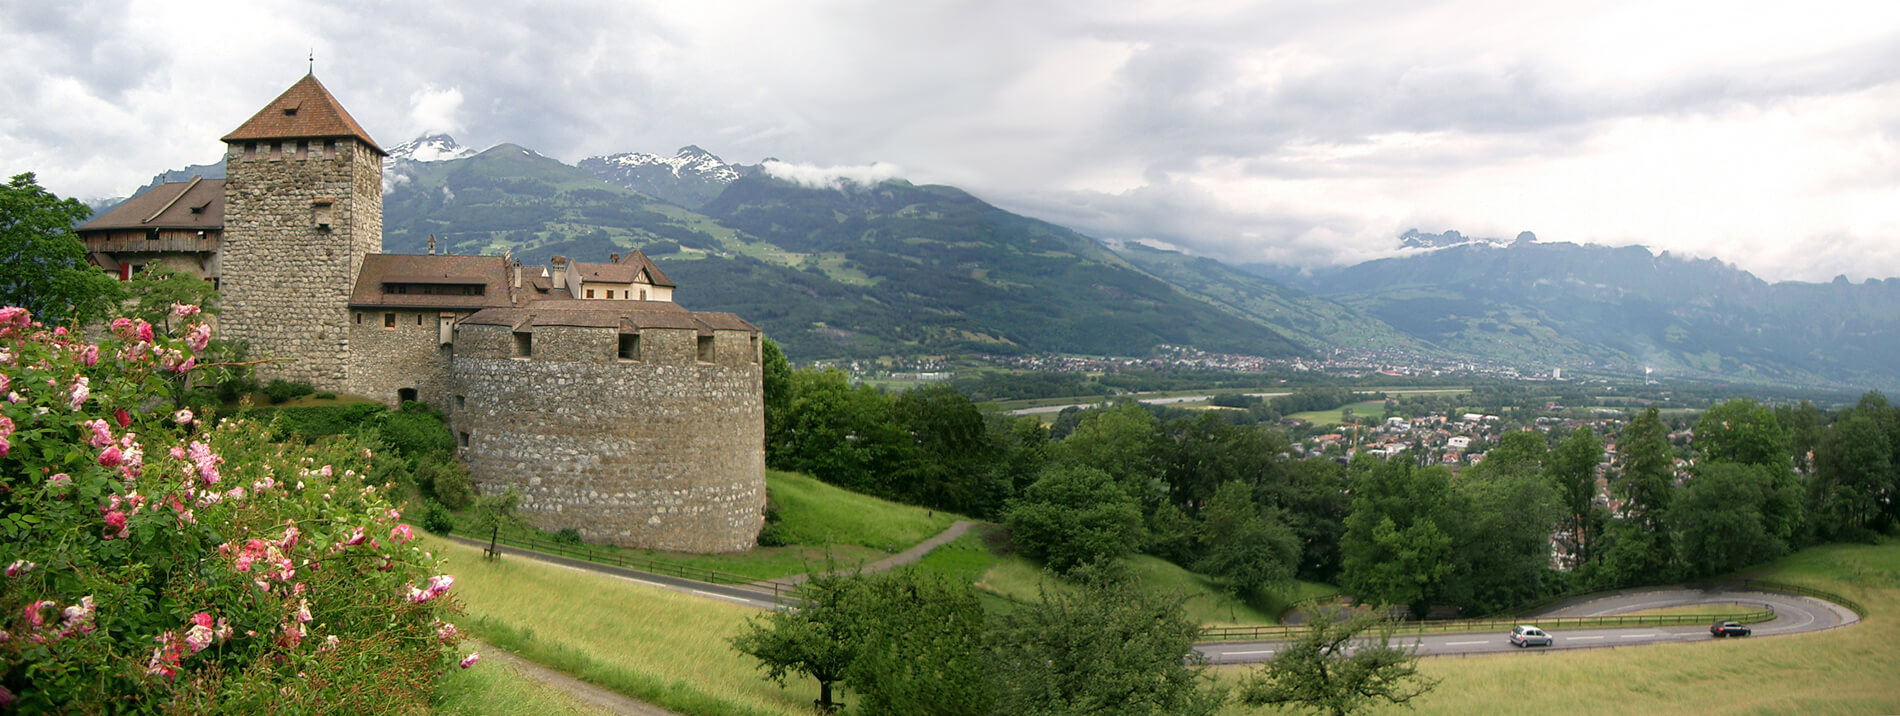 Замок Вадуц в Лихтенштейне